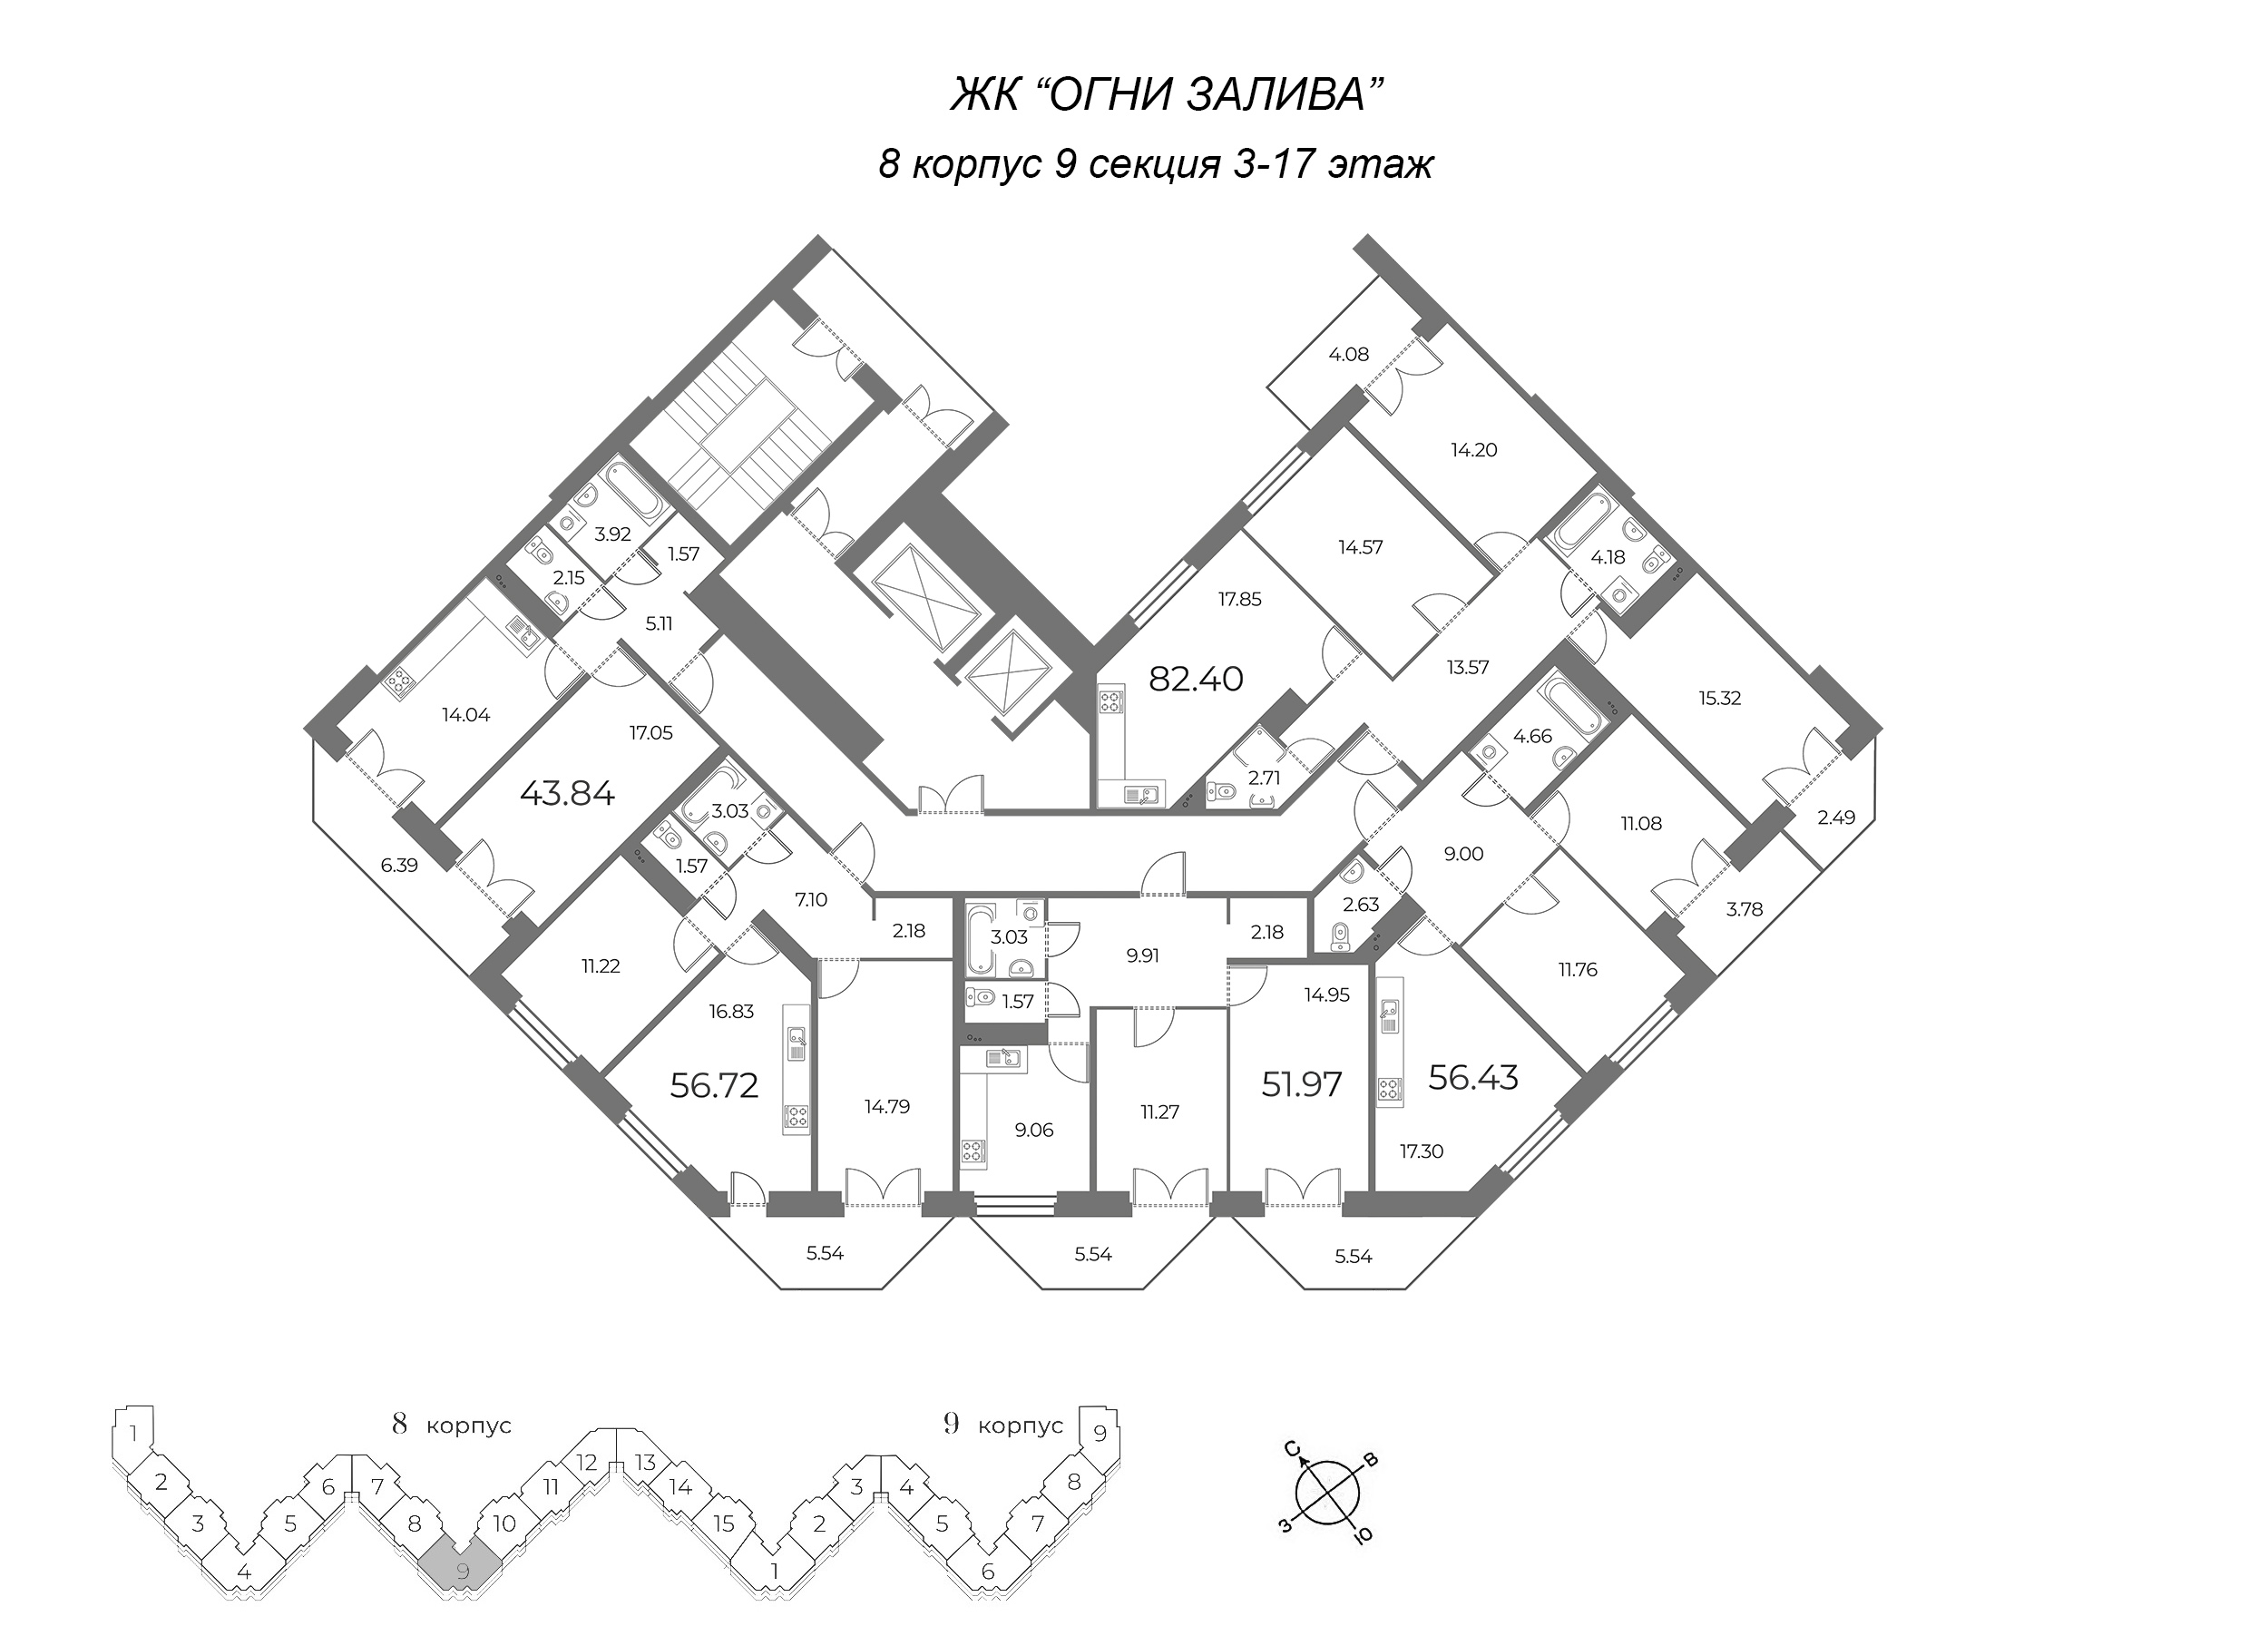 3-комнатная (Евро) квартира, 58.32 м² - планировка этажа